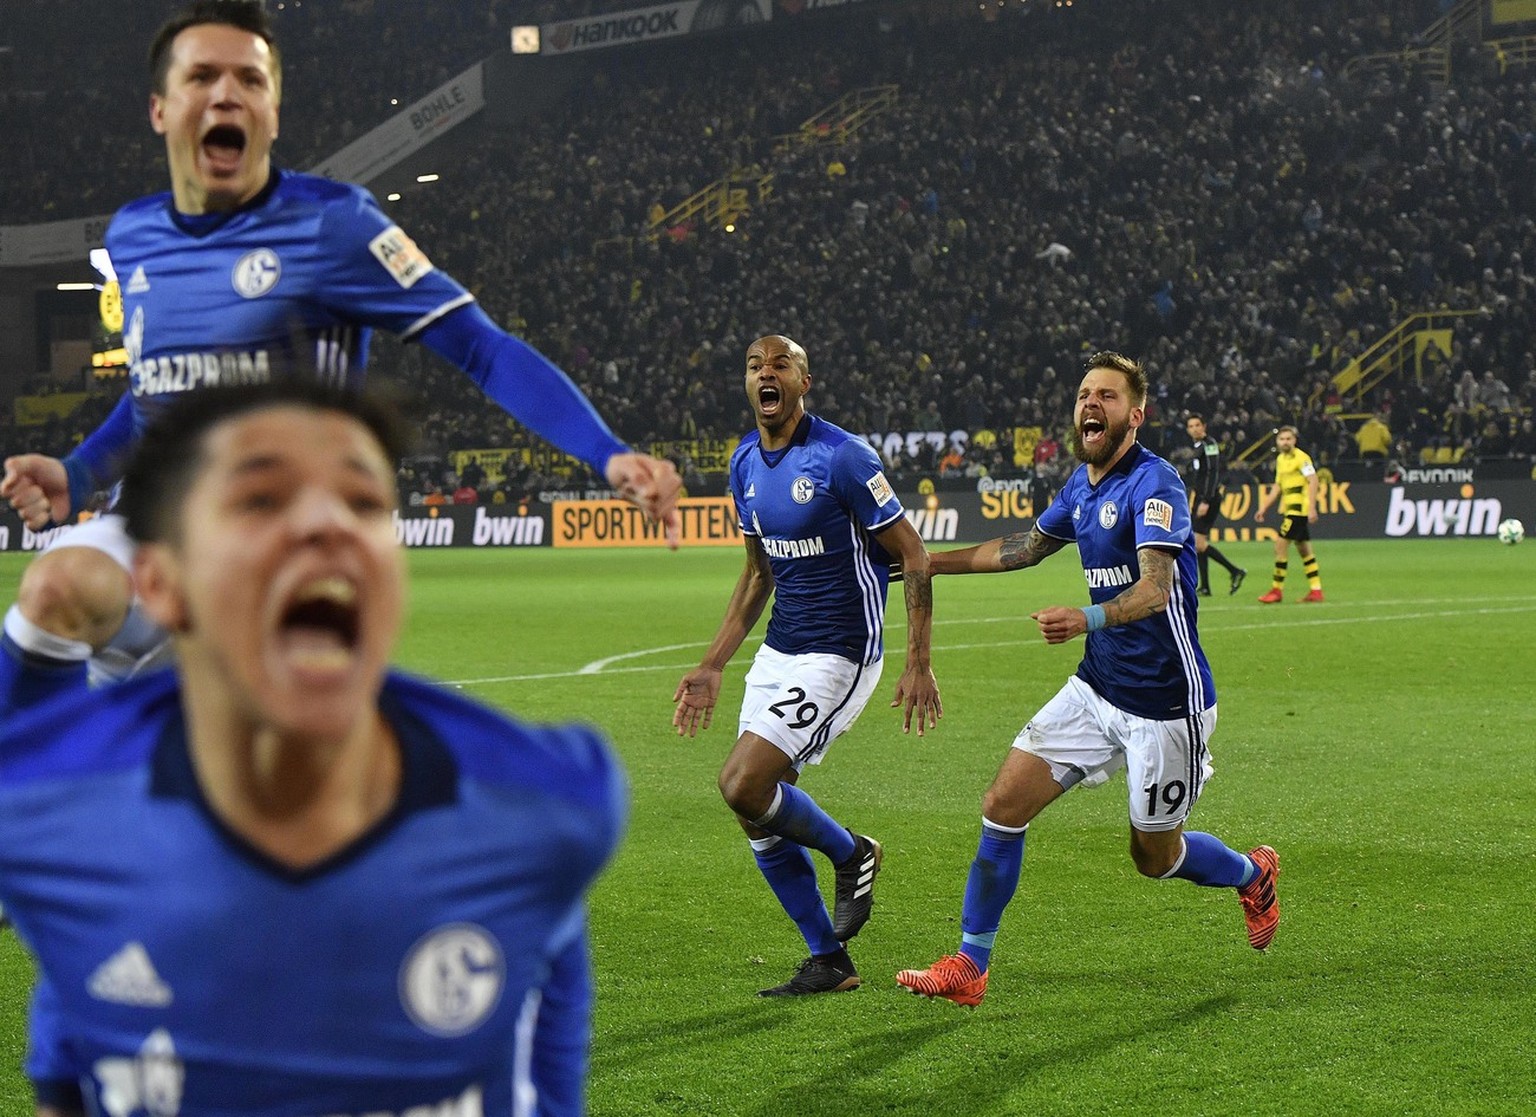 Schalke celebrates after Naldo, center, scored the last goal during the German Bundesliga soccer match between Borussia Dortmund and FC Schalke 04 in Dortmund, Germany, Saturday, Nov. 25, 2017. The ma ...